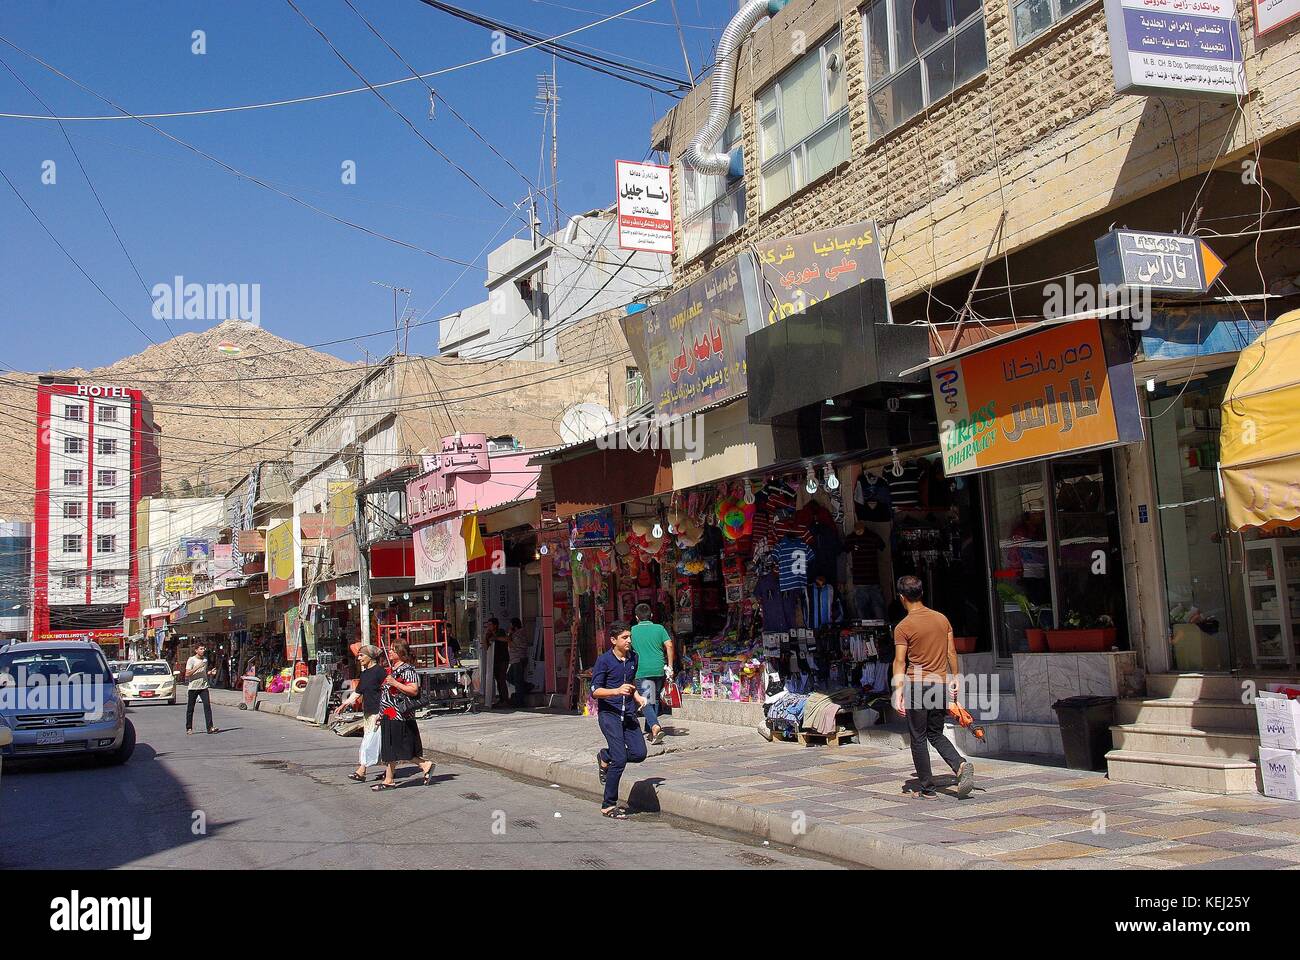 Around the market in Dohuk (Iraq - Kurdistan) Stock Photo